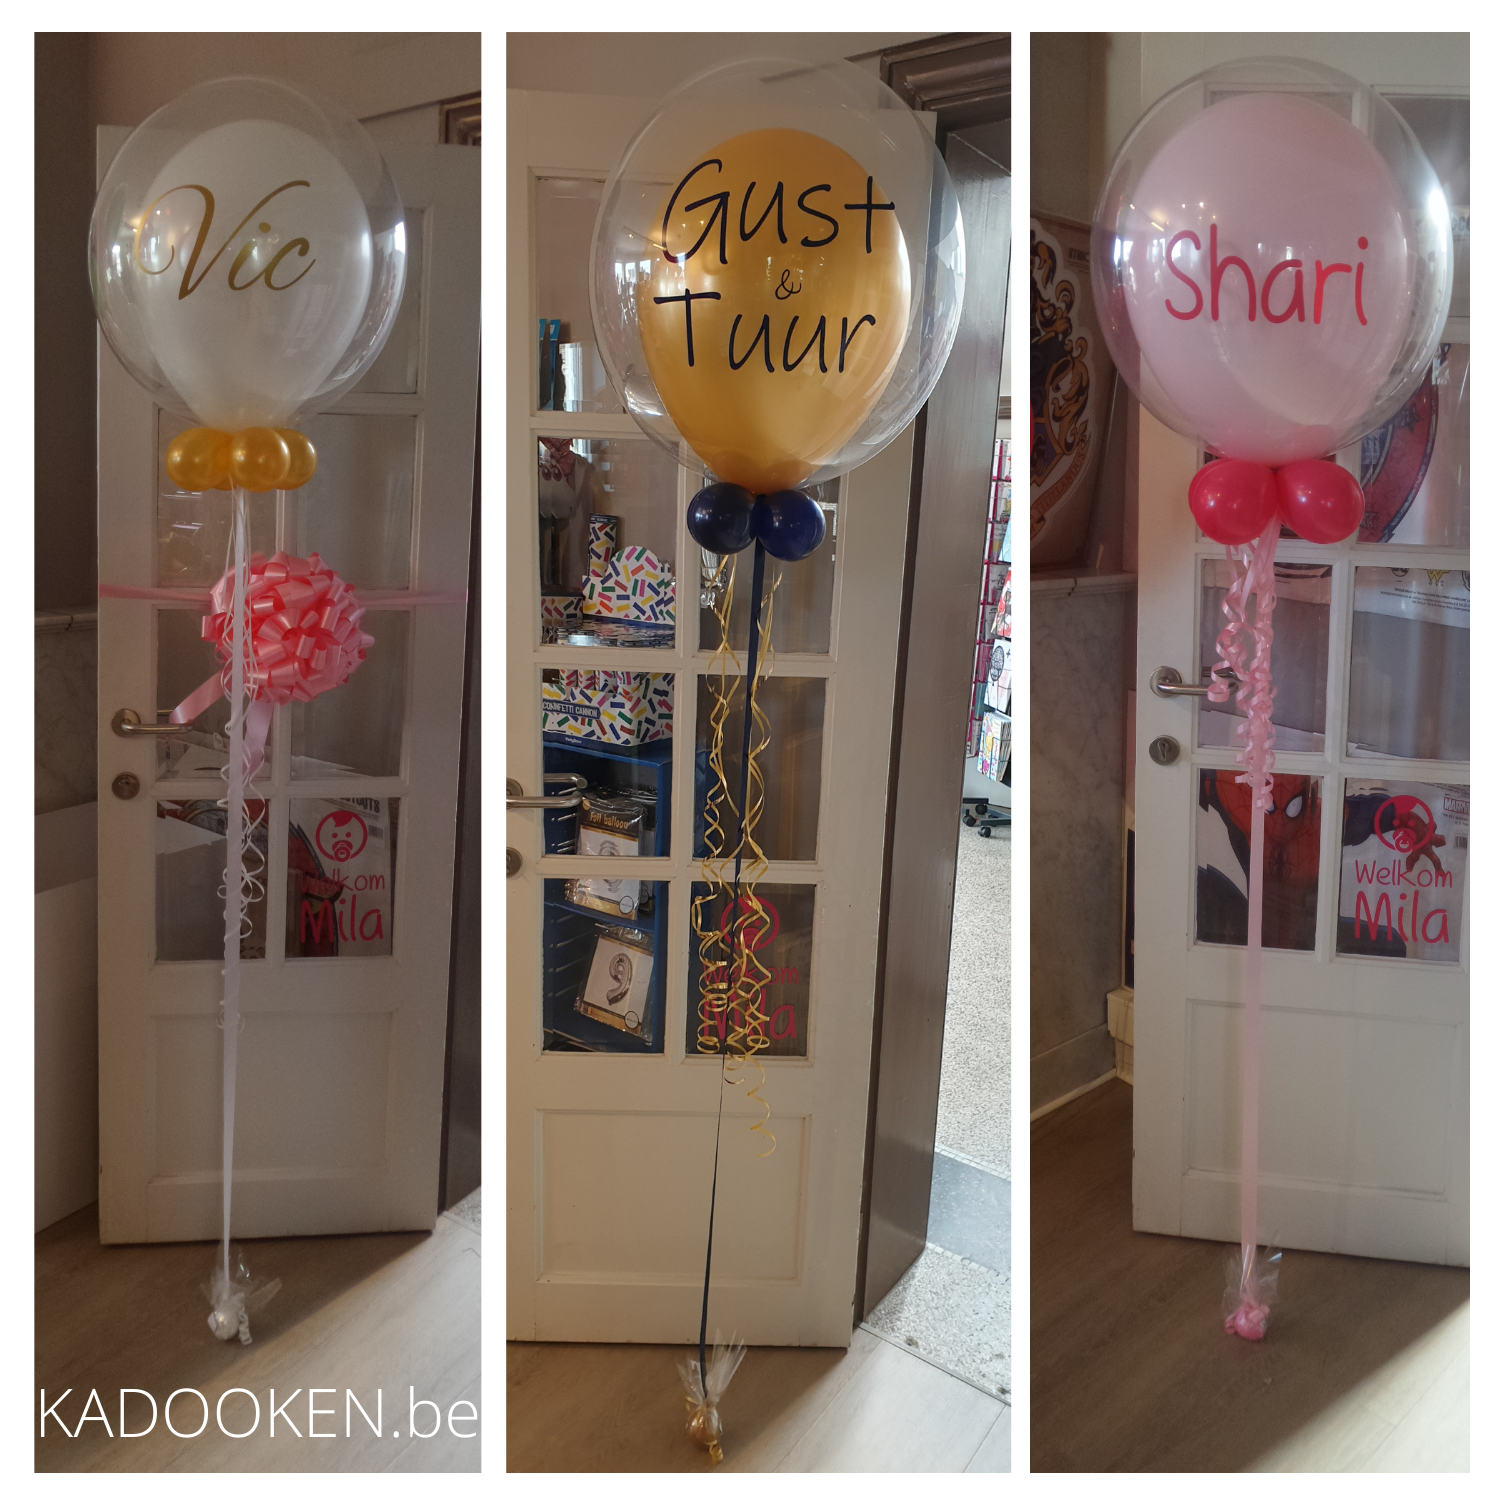 Standaard Bubble ballon met tekst KADOOKEN.be